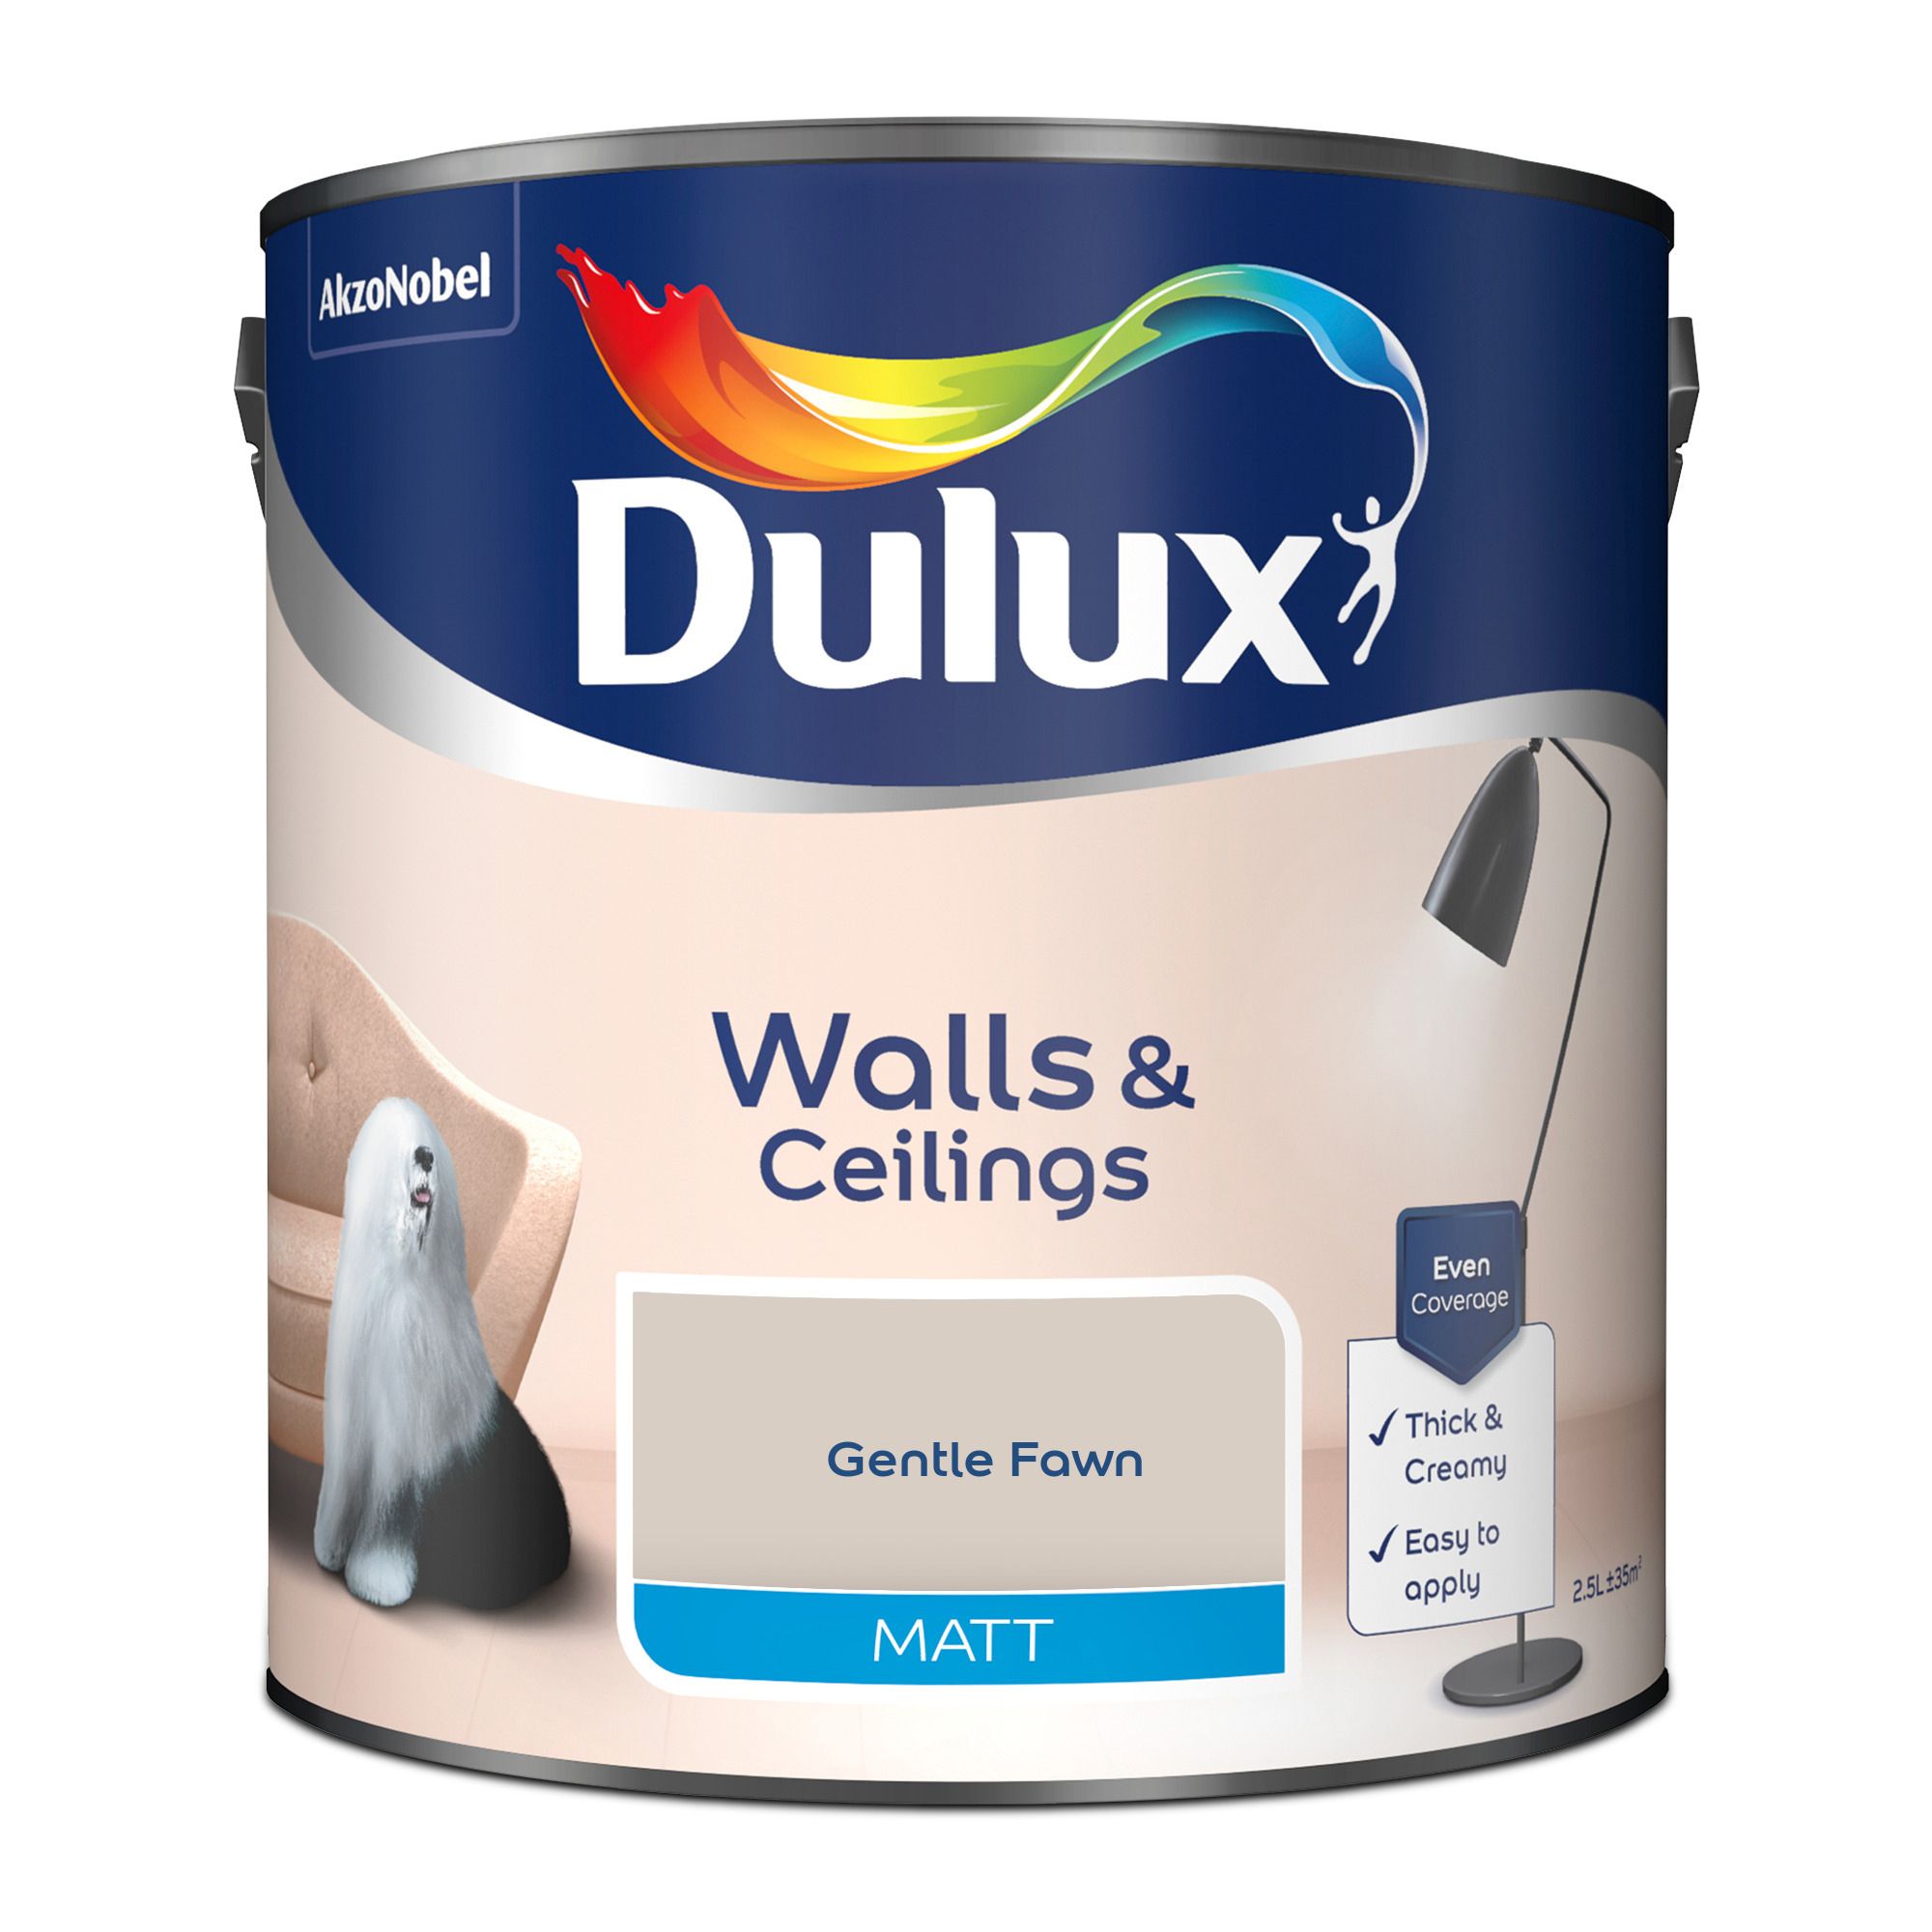 Dulux Walls & ceilings Gentle fawn Matt Emulsion paint, 2.5L